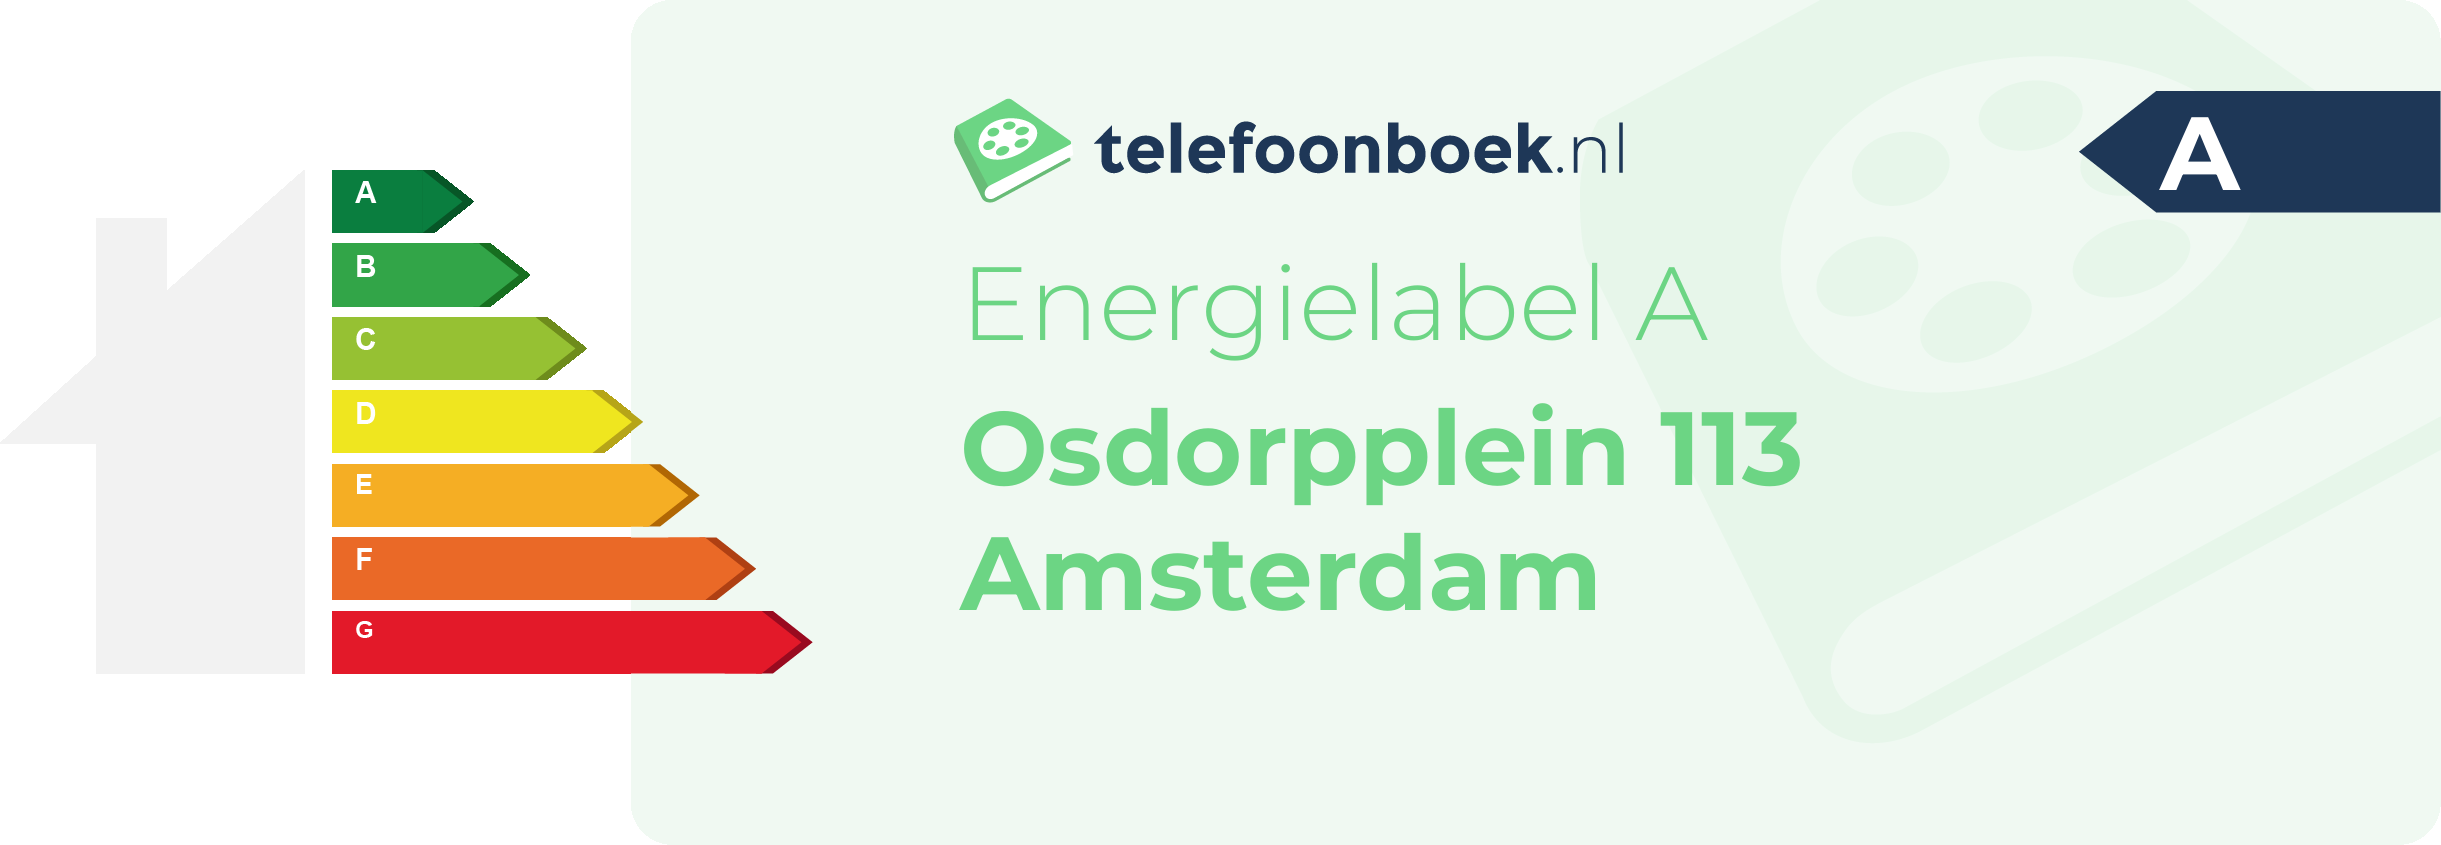 Energielabel Osdorpplein 113 Amsterdam